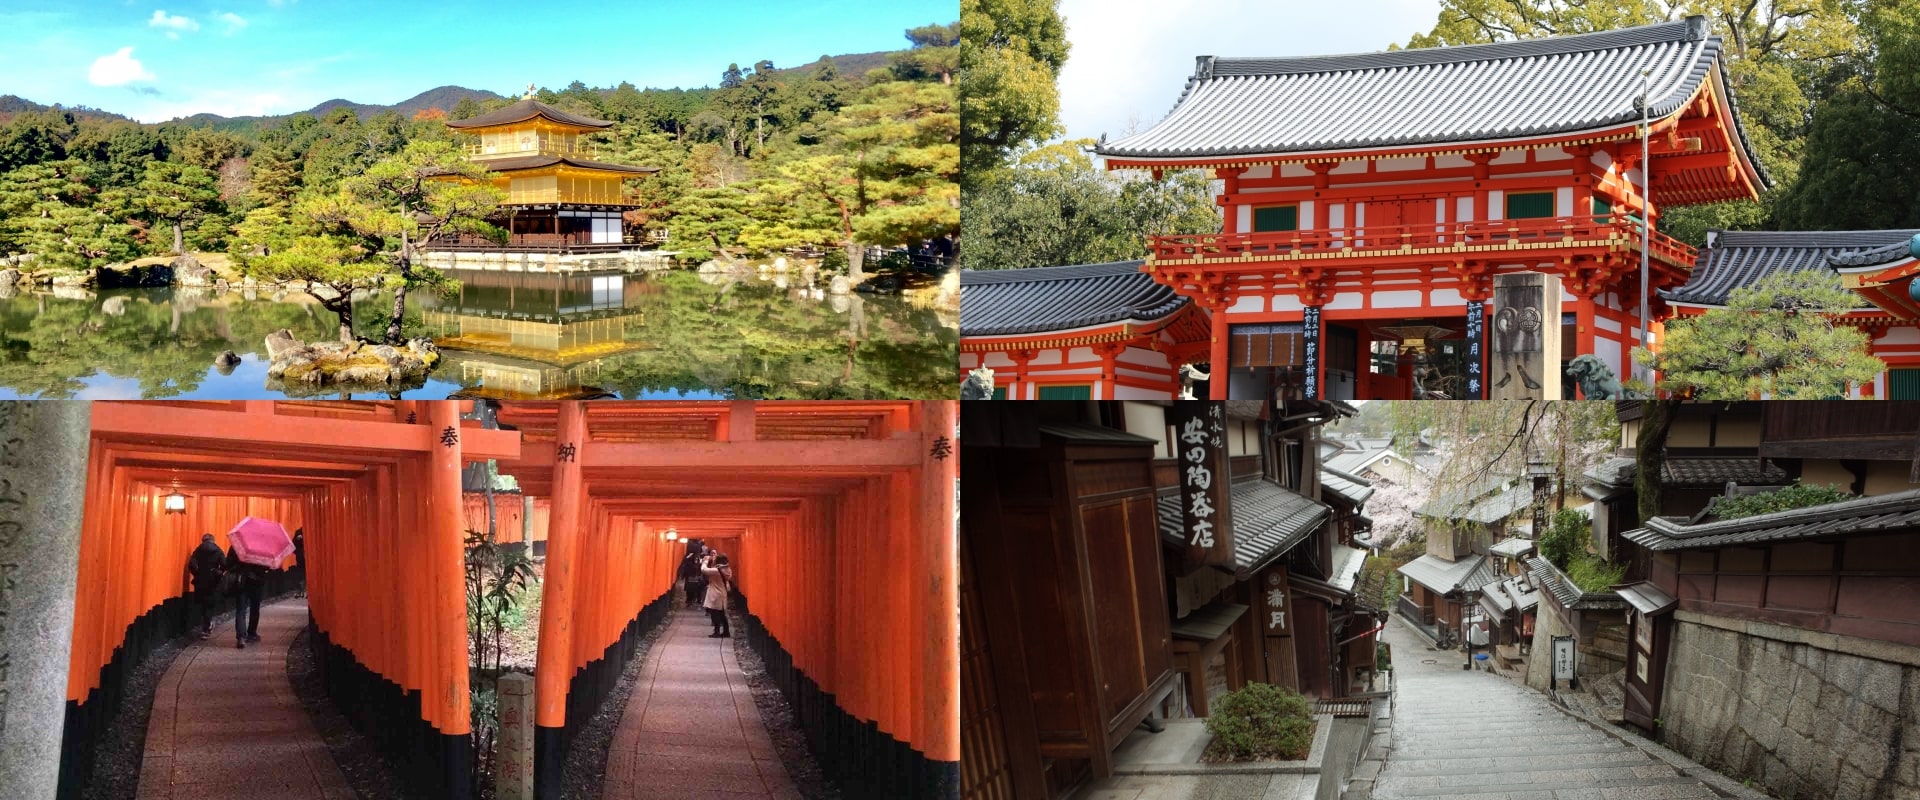 Private Tours in Kyoto